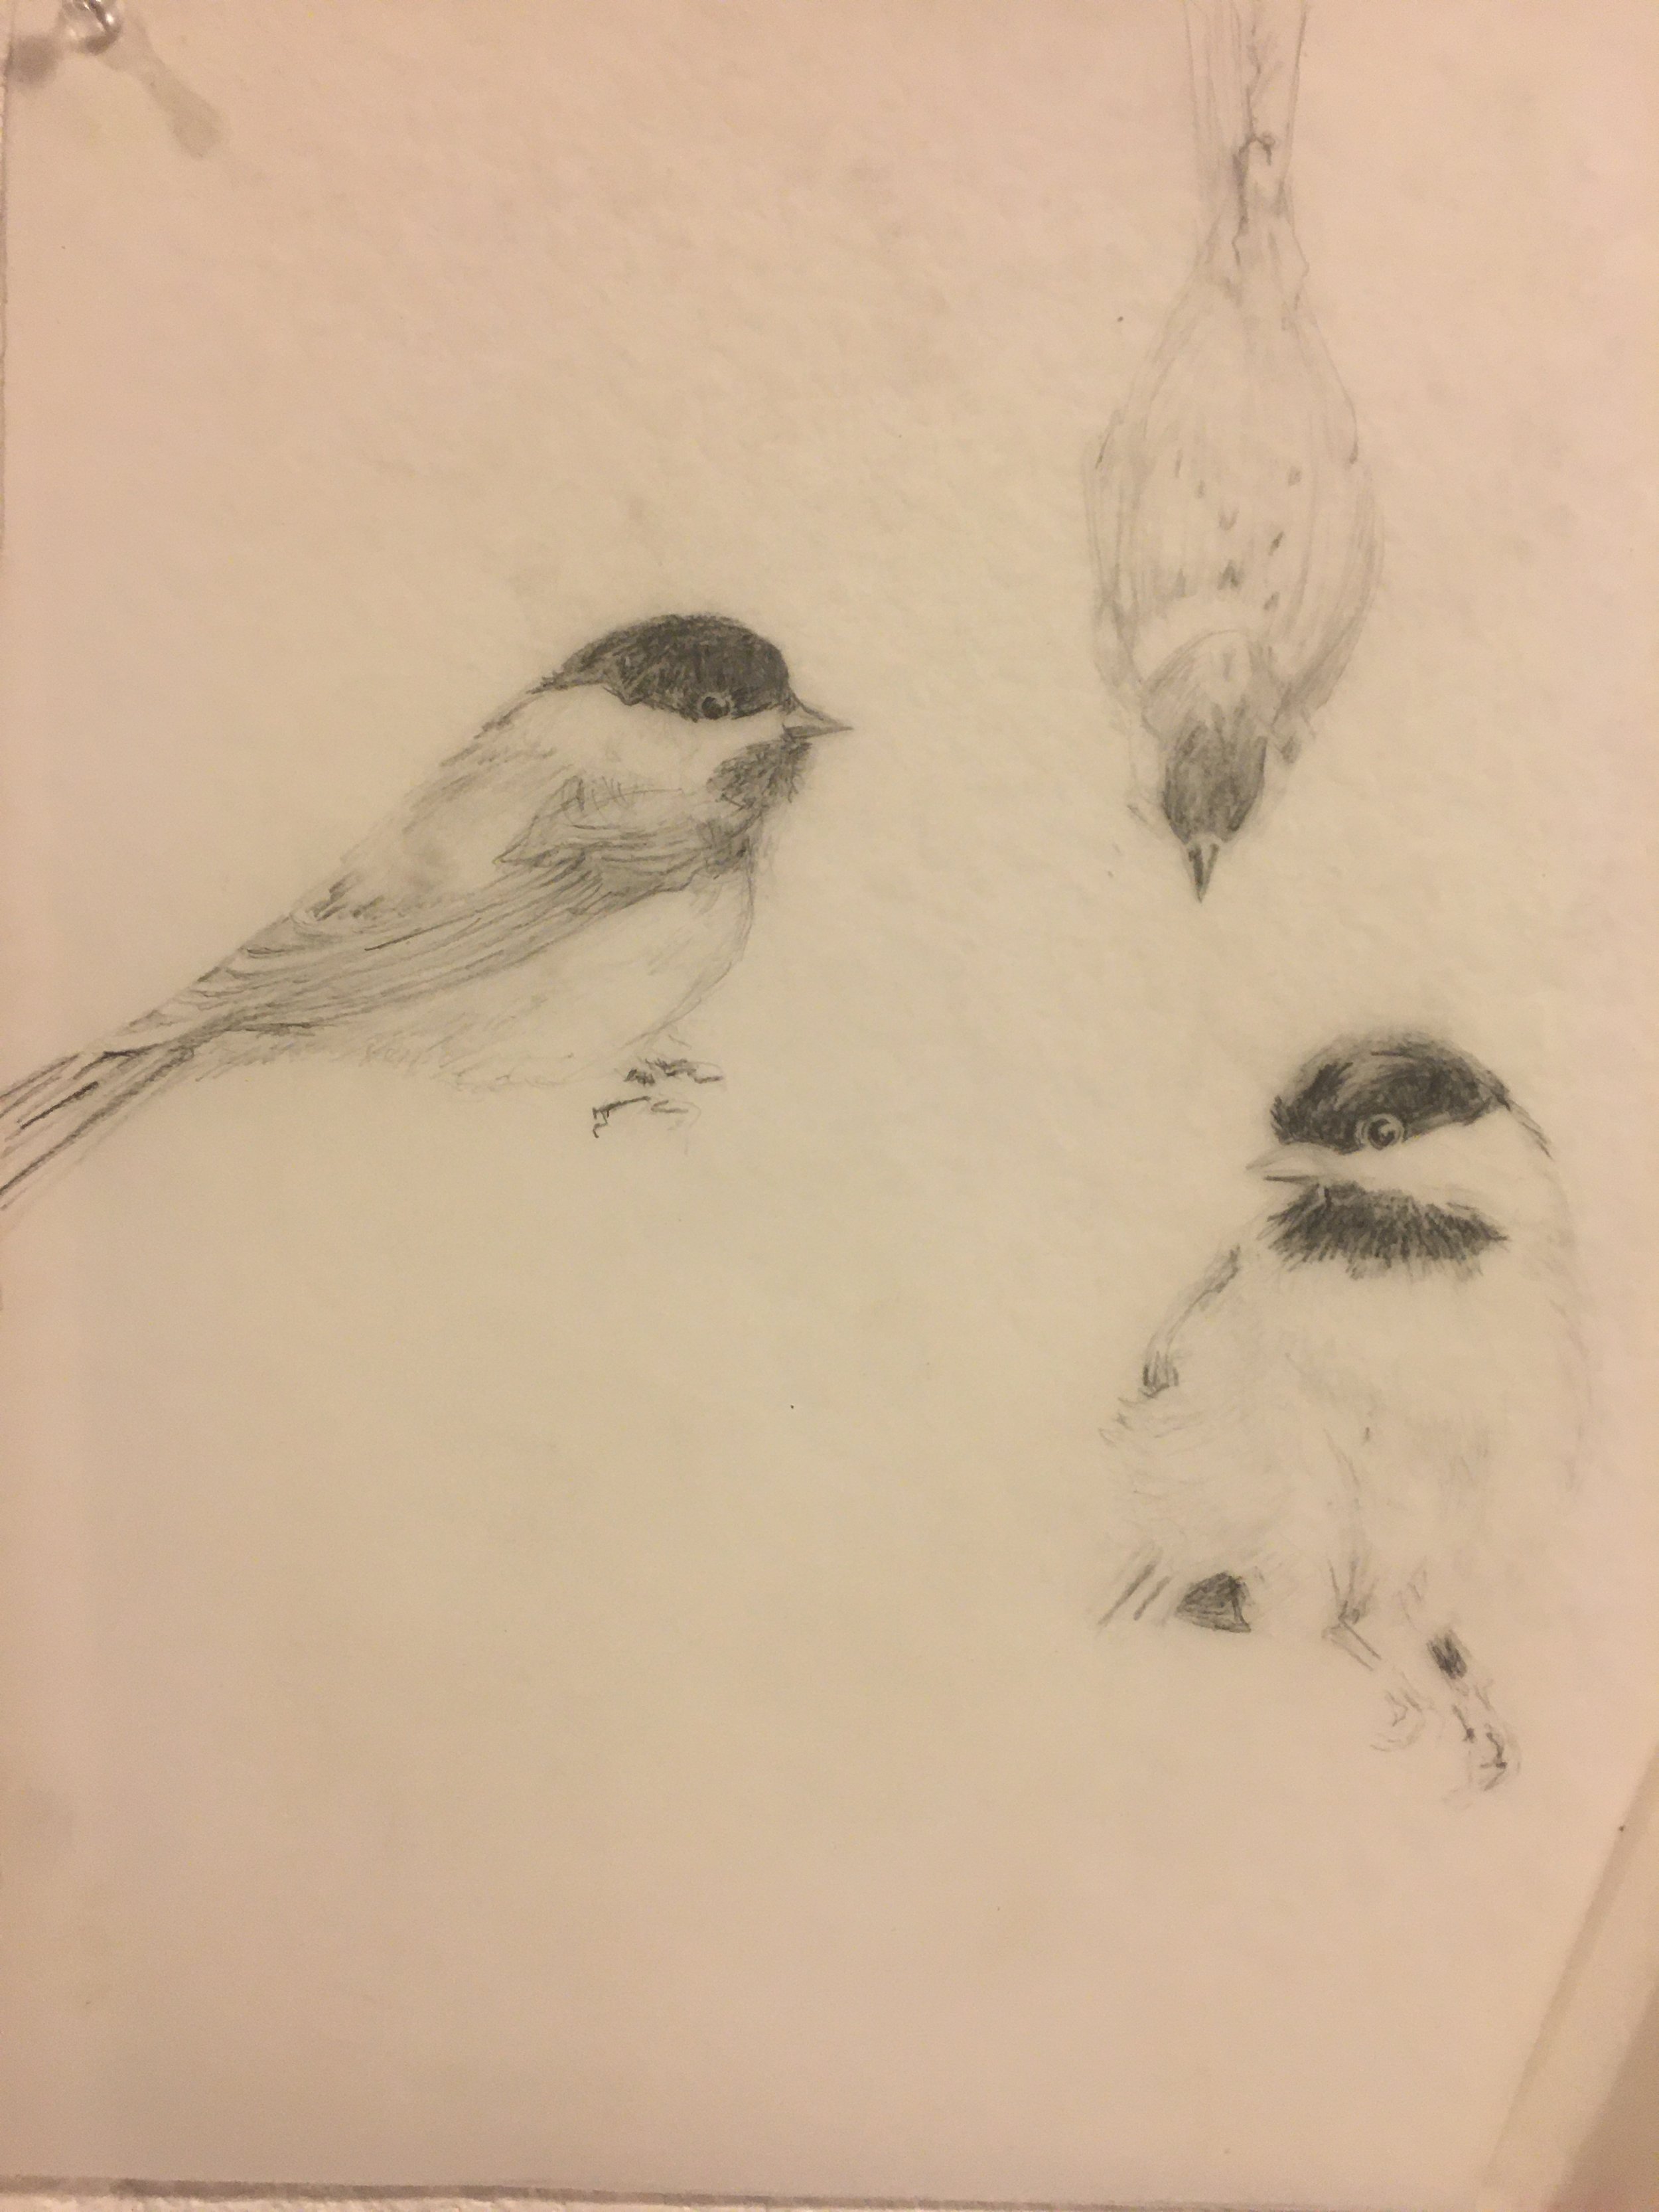 Detail - The birds